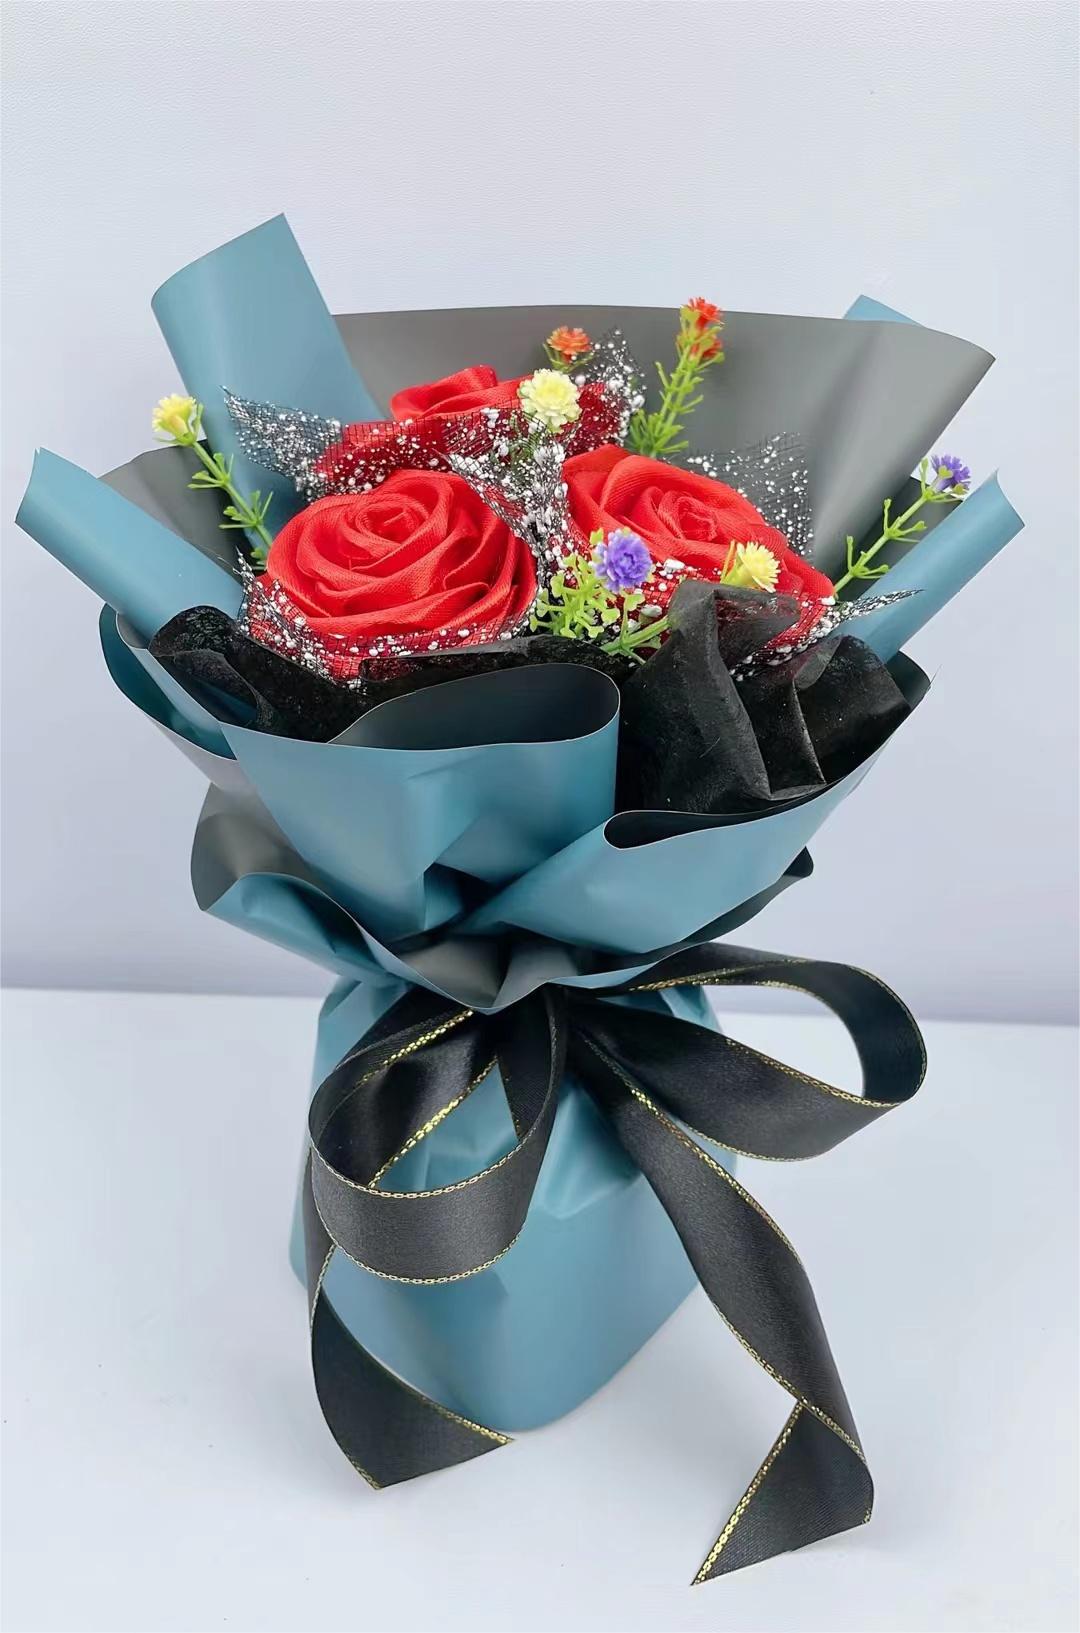 Handmade diy kustom pita bunga mawar 3pcs produk selesai untuk hadiah ulang tahun pacar